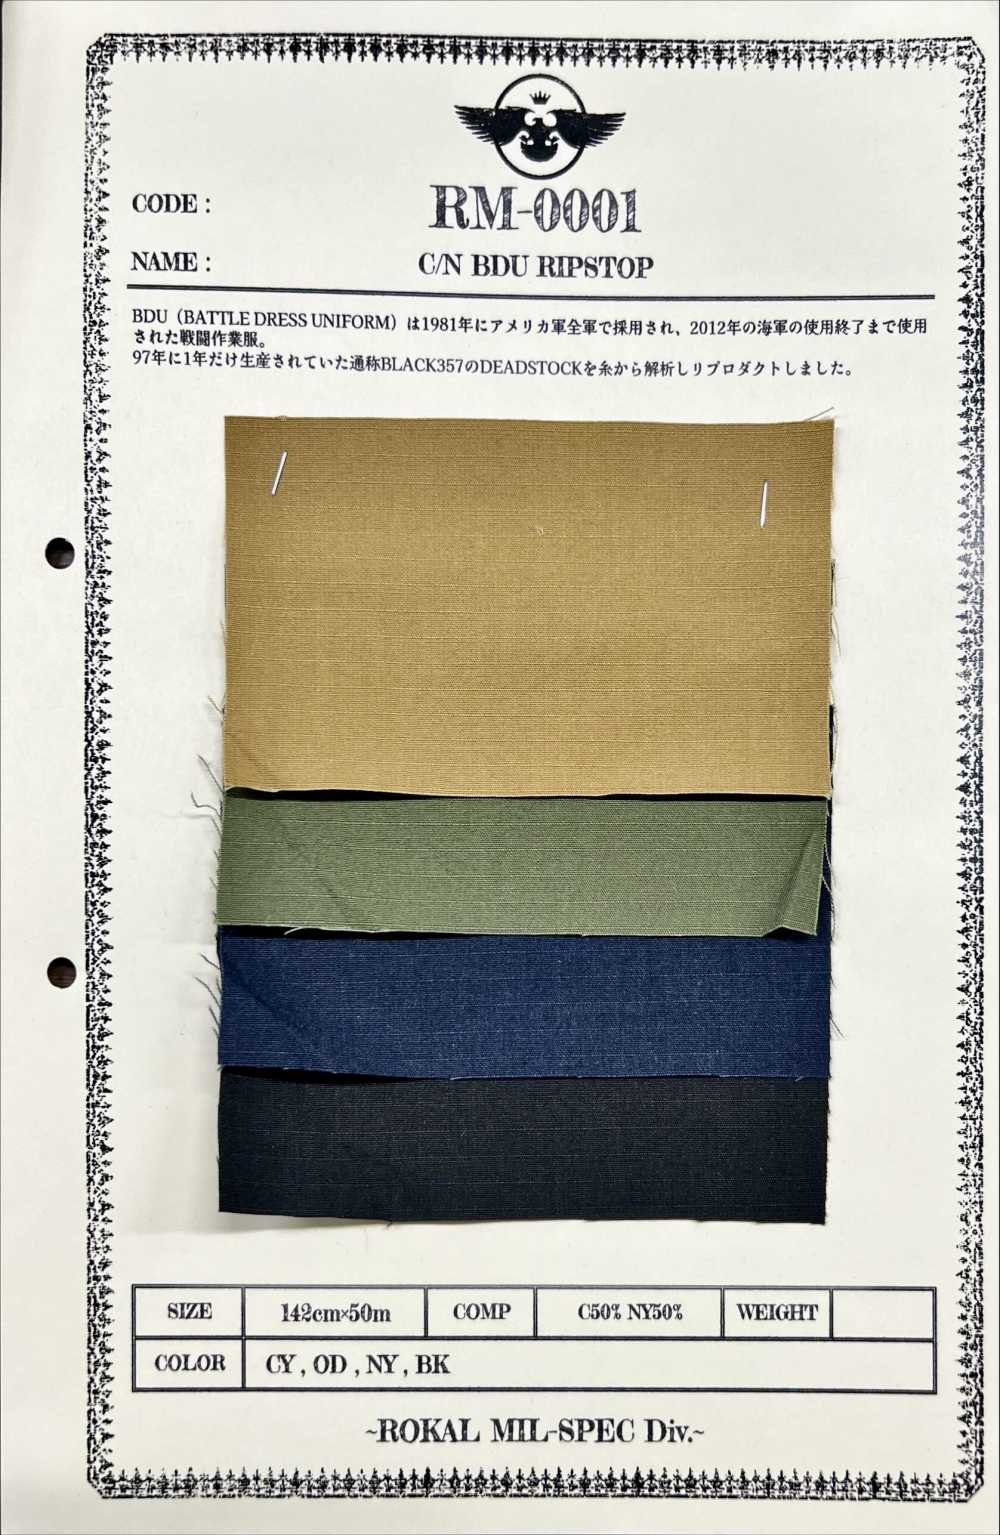 RM-0001 C/N BDU RIPSTOP[Textile / Fabric] Local